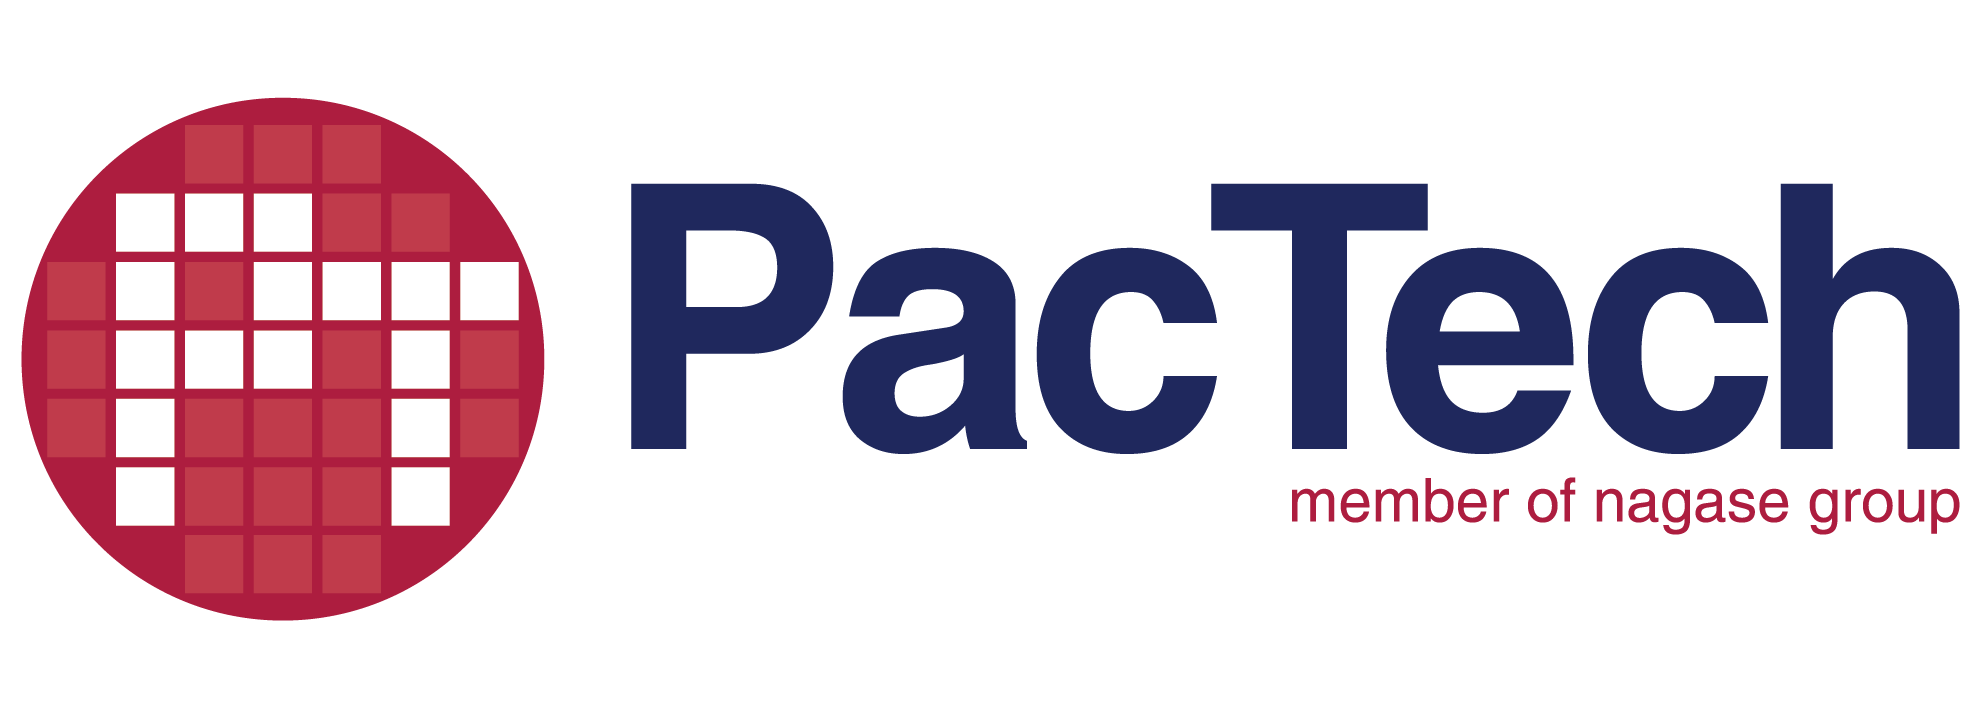 PacTech - Silver Sponsor